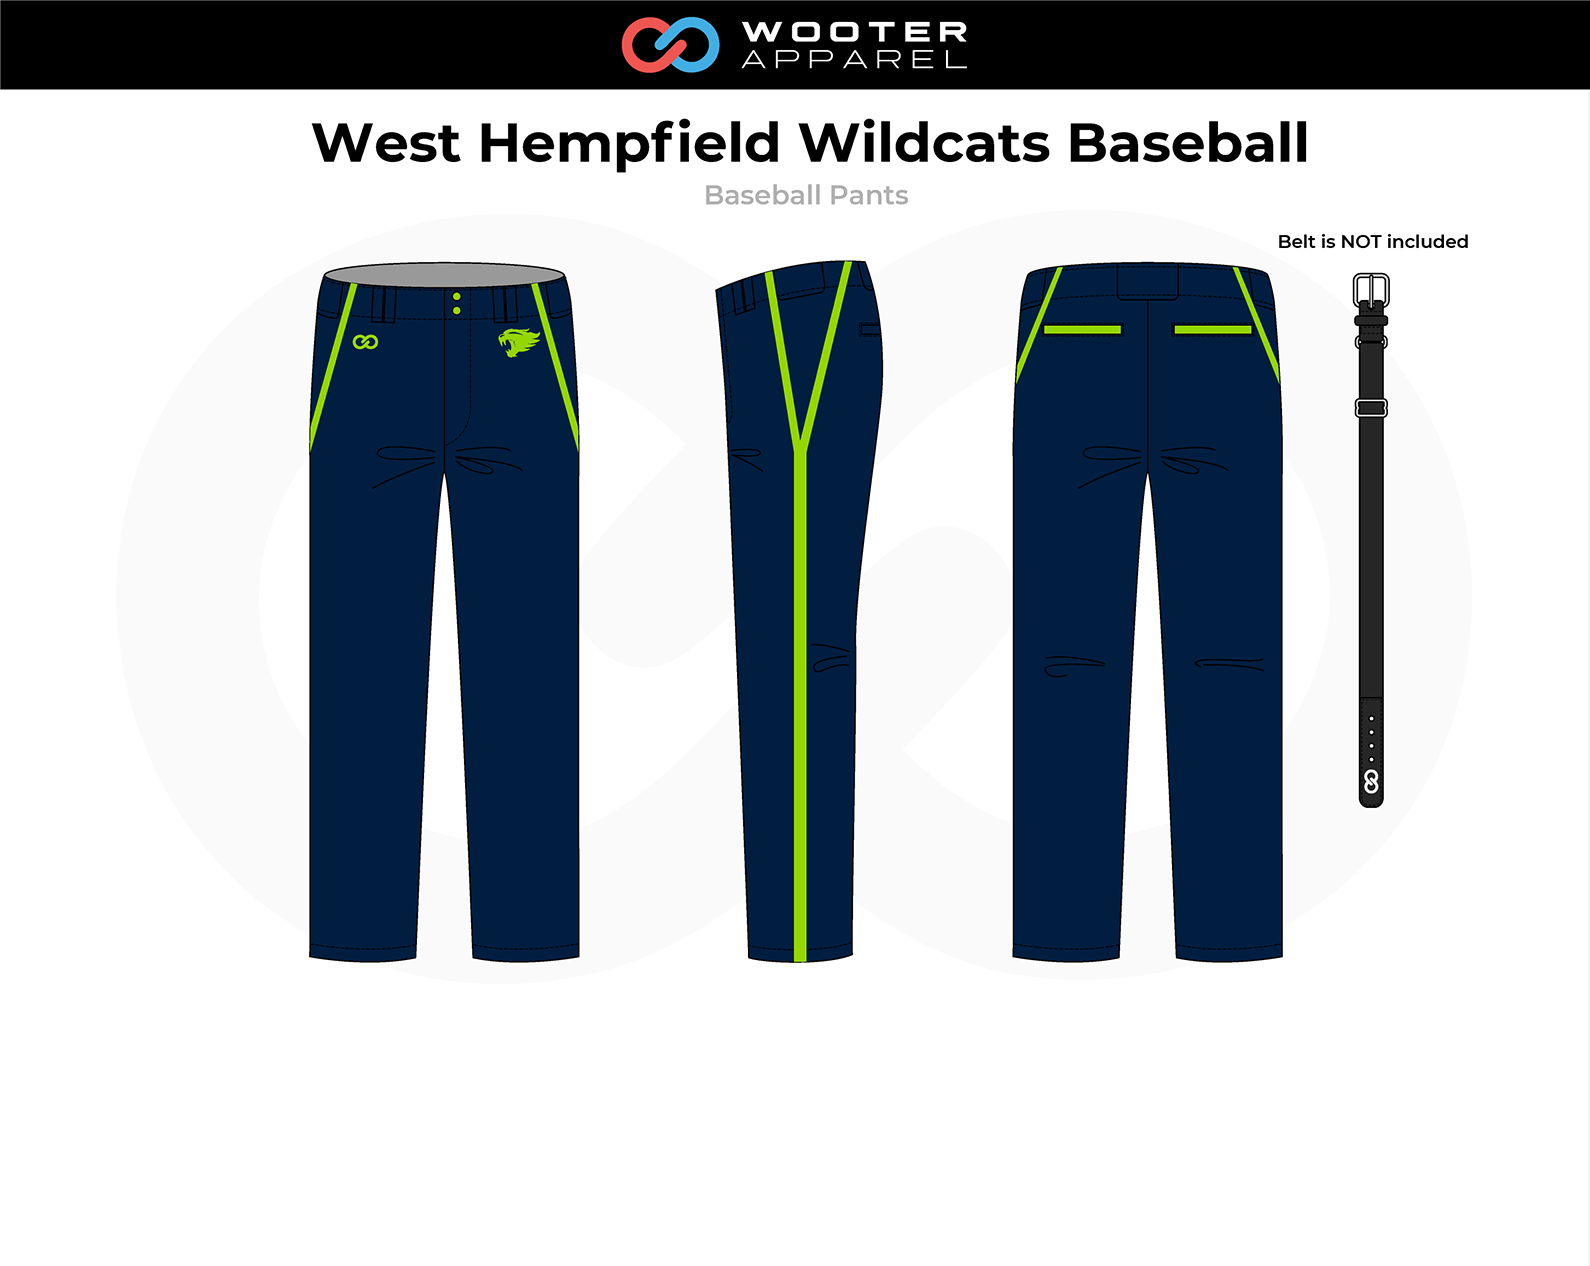 2018-11-06 West Hempfield Wildcats Baseball Pants (Navy).png